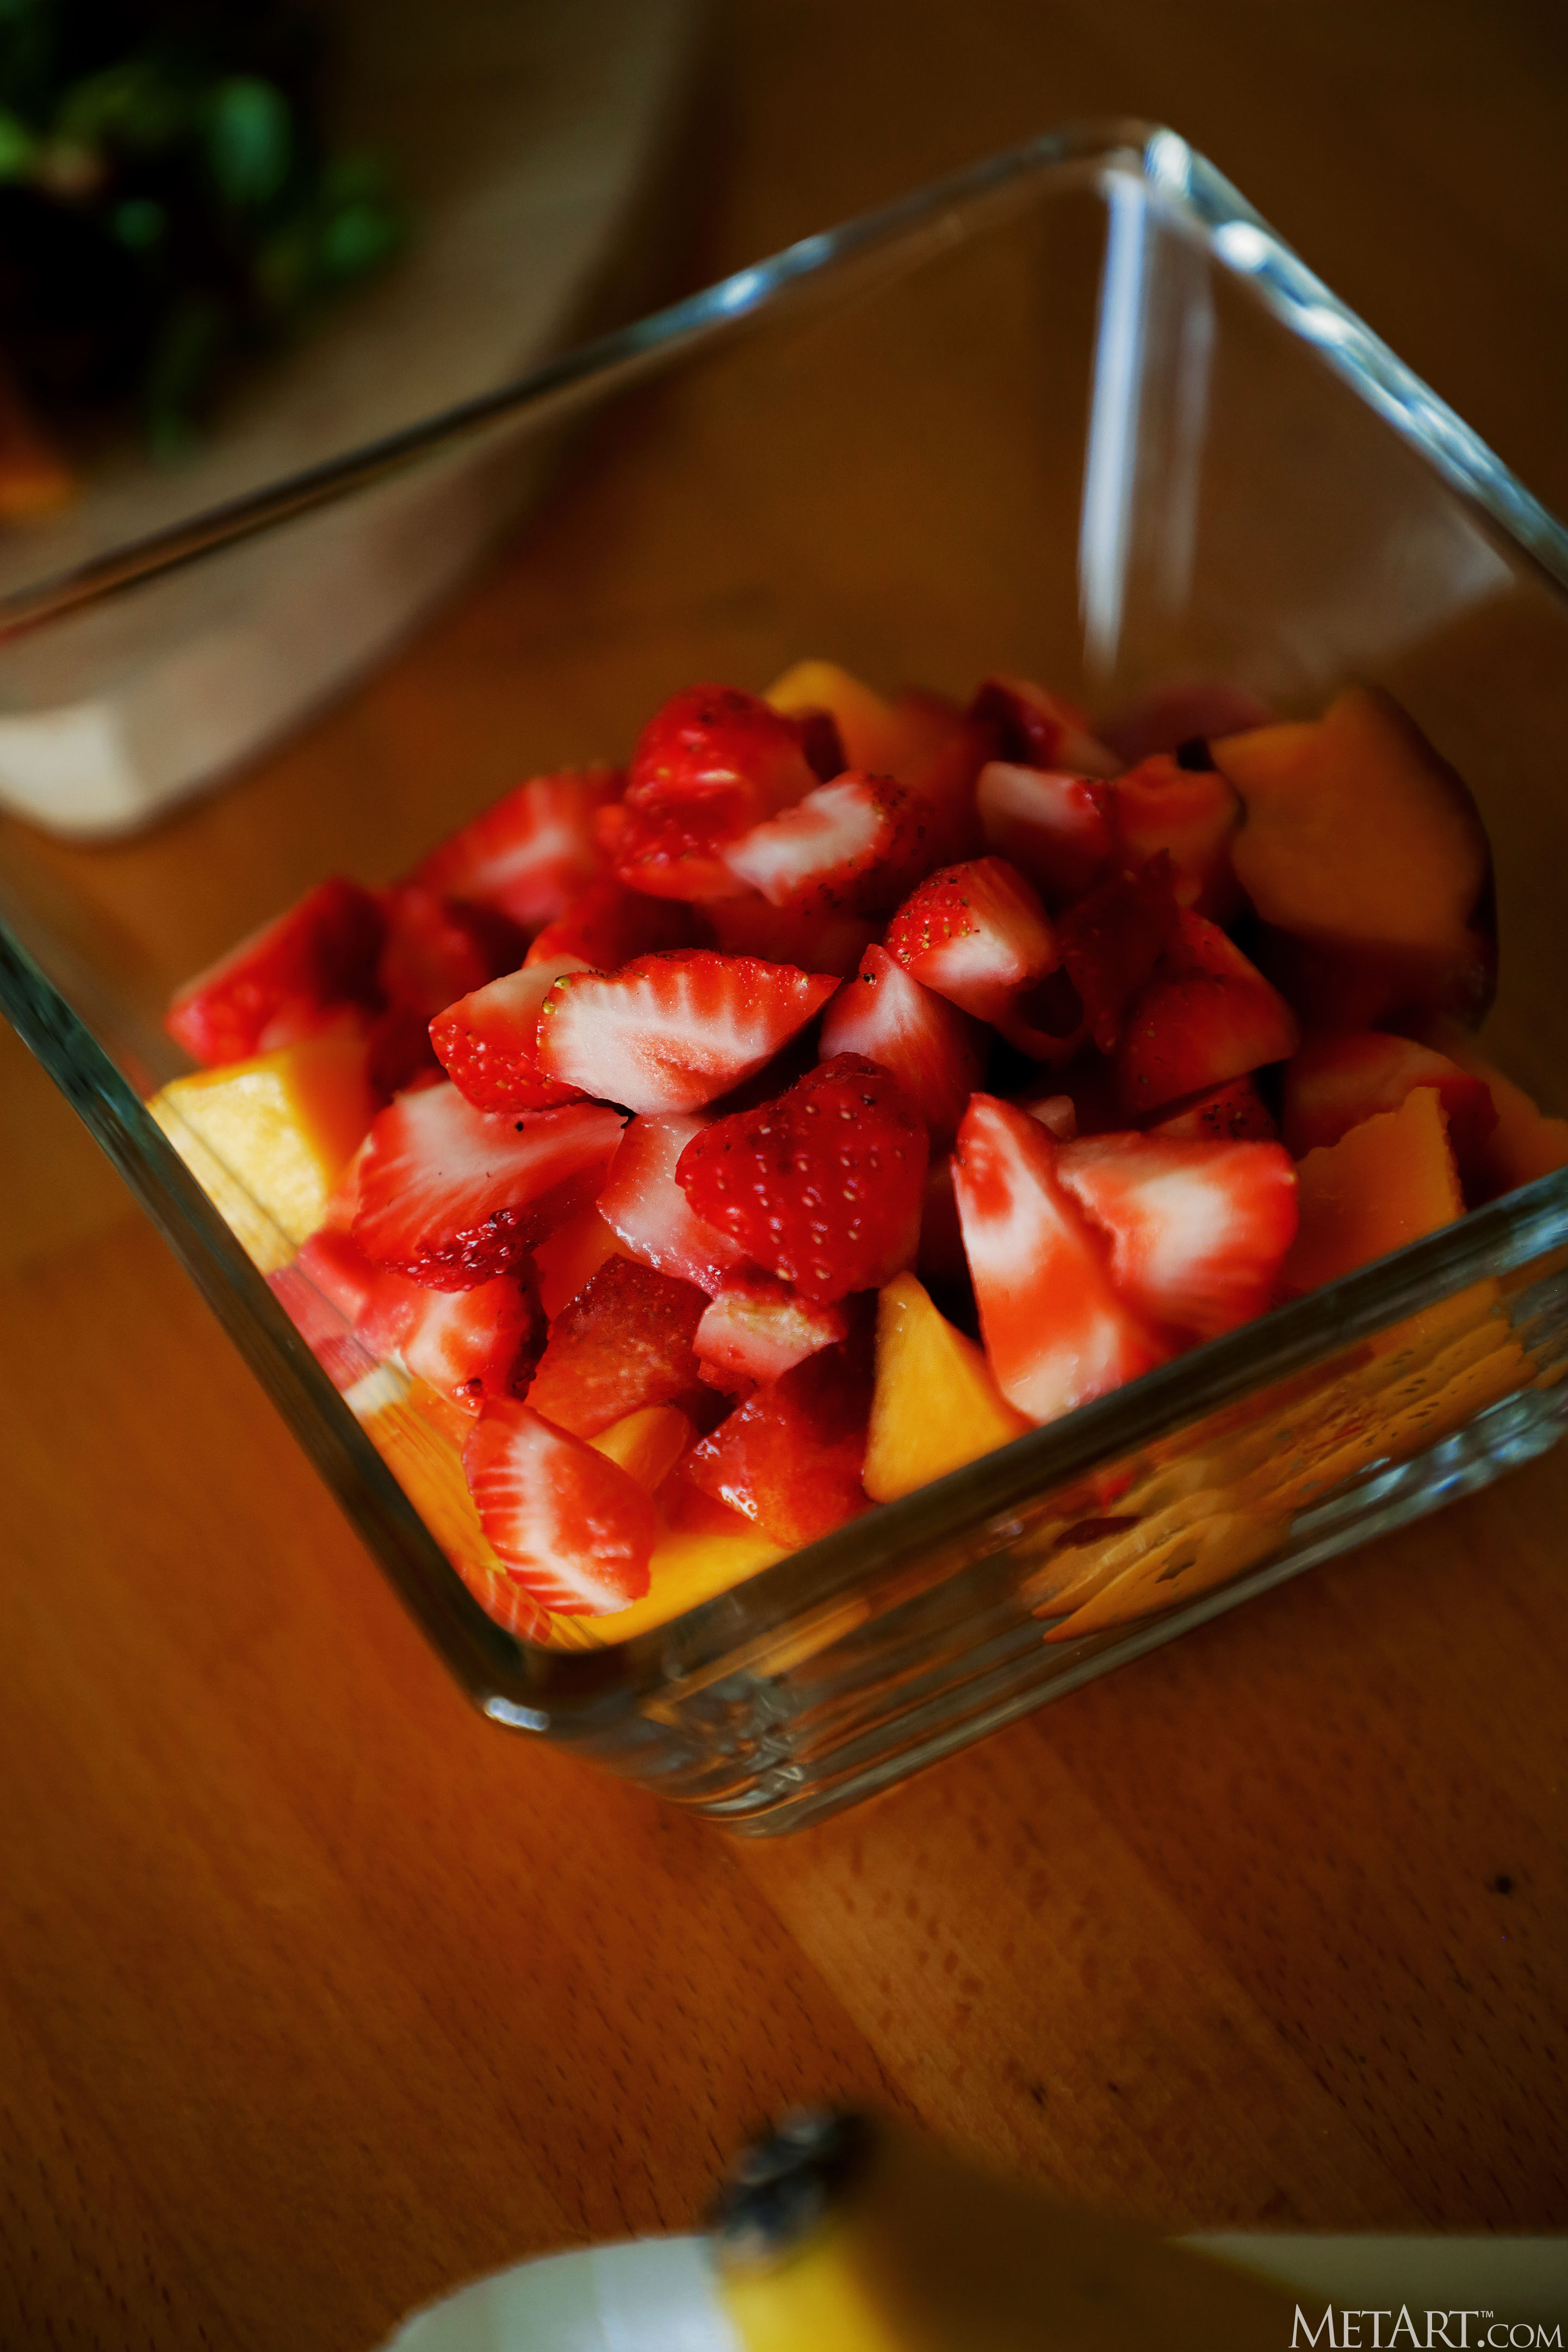 MetArt_Fruit-Salad_Cassia_high_0019.jpg